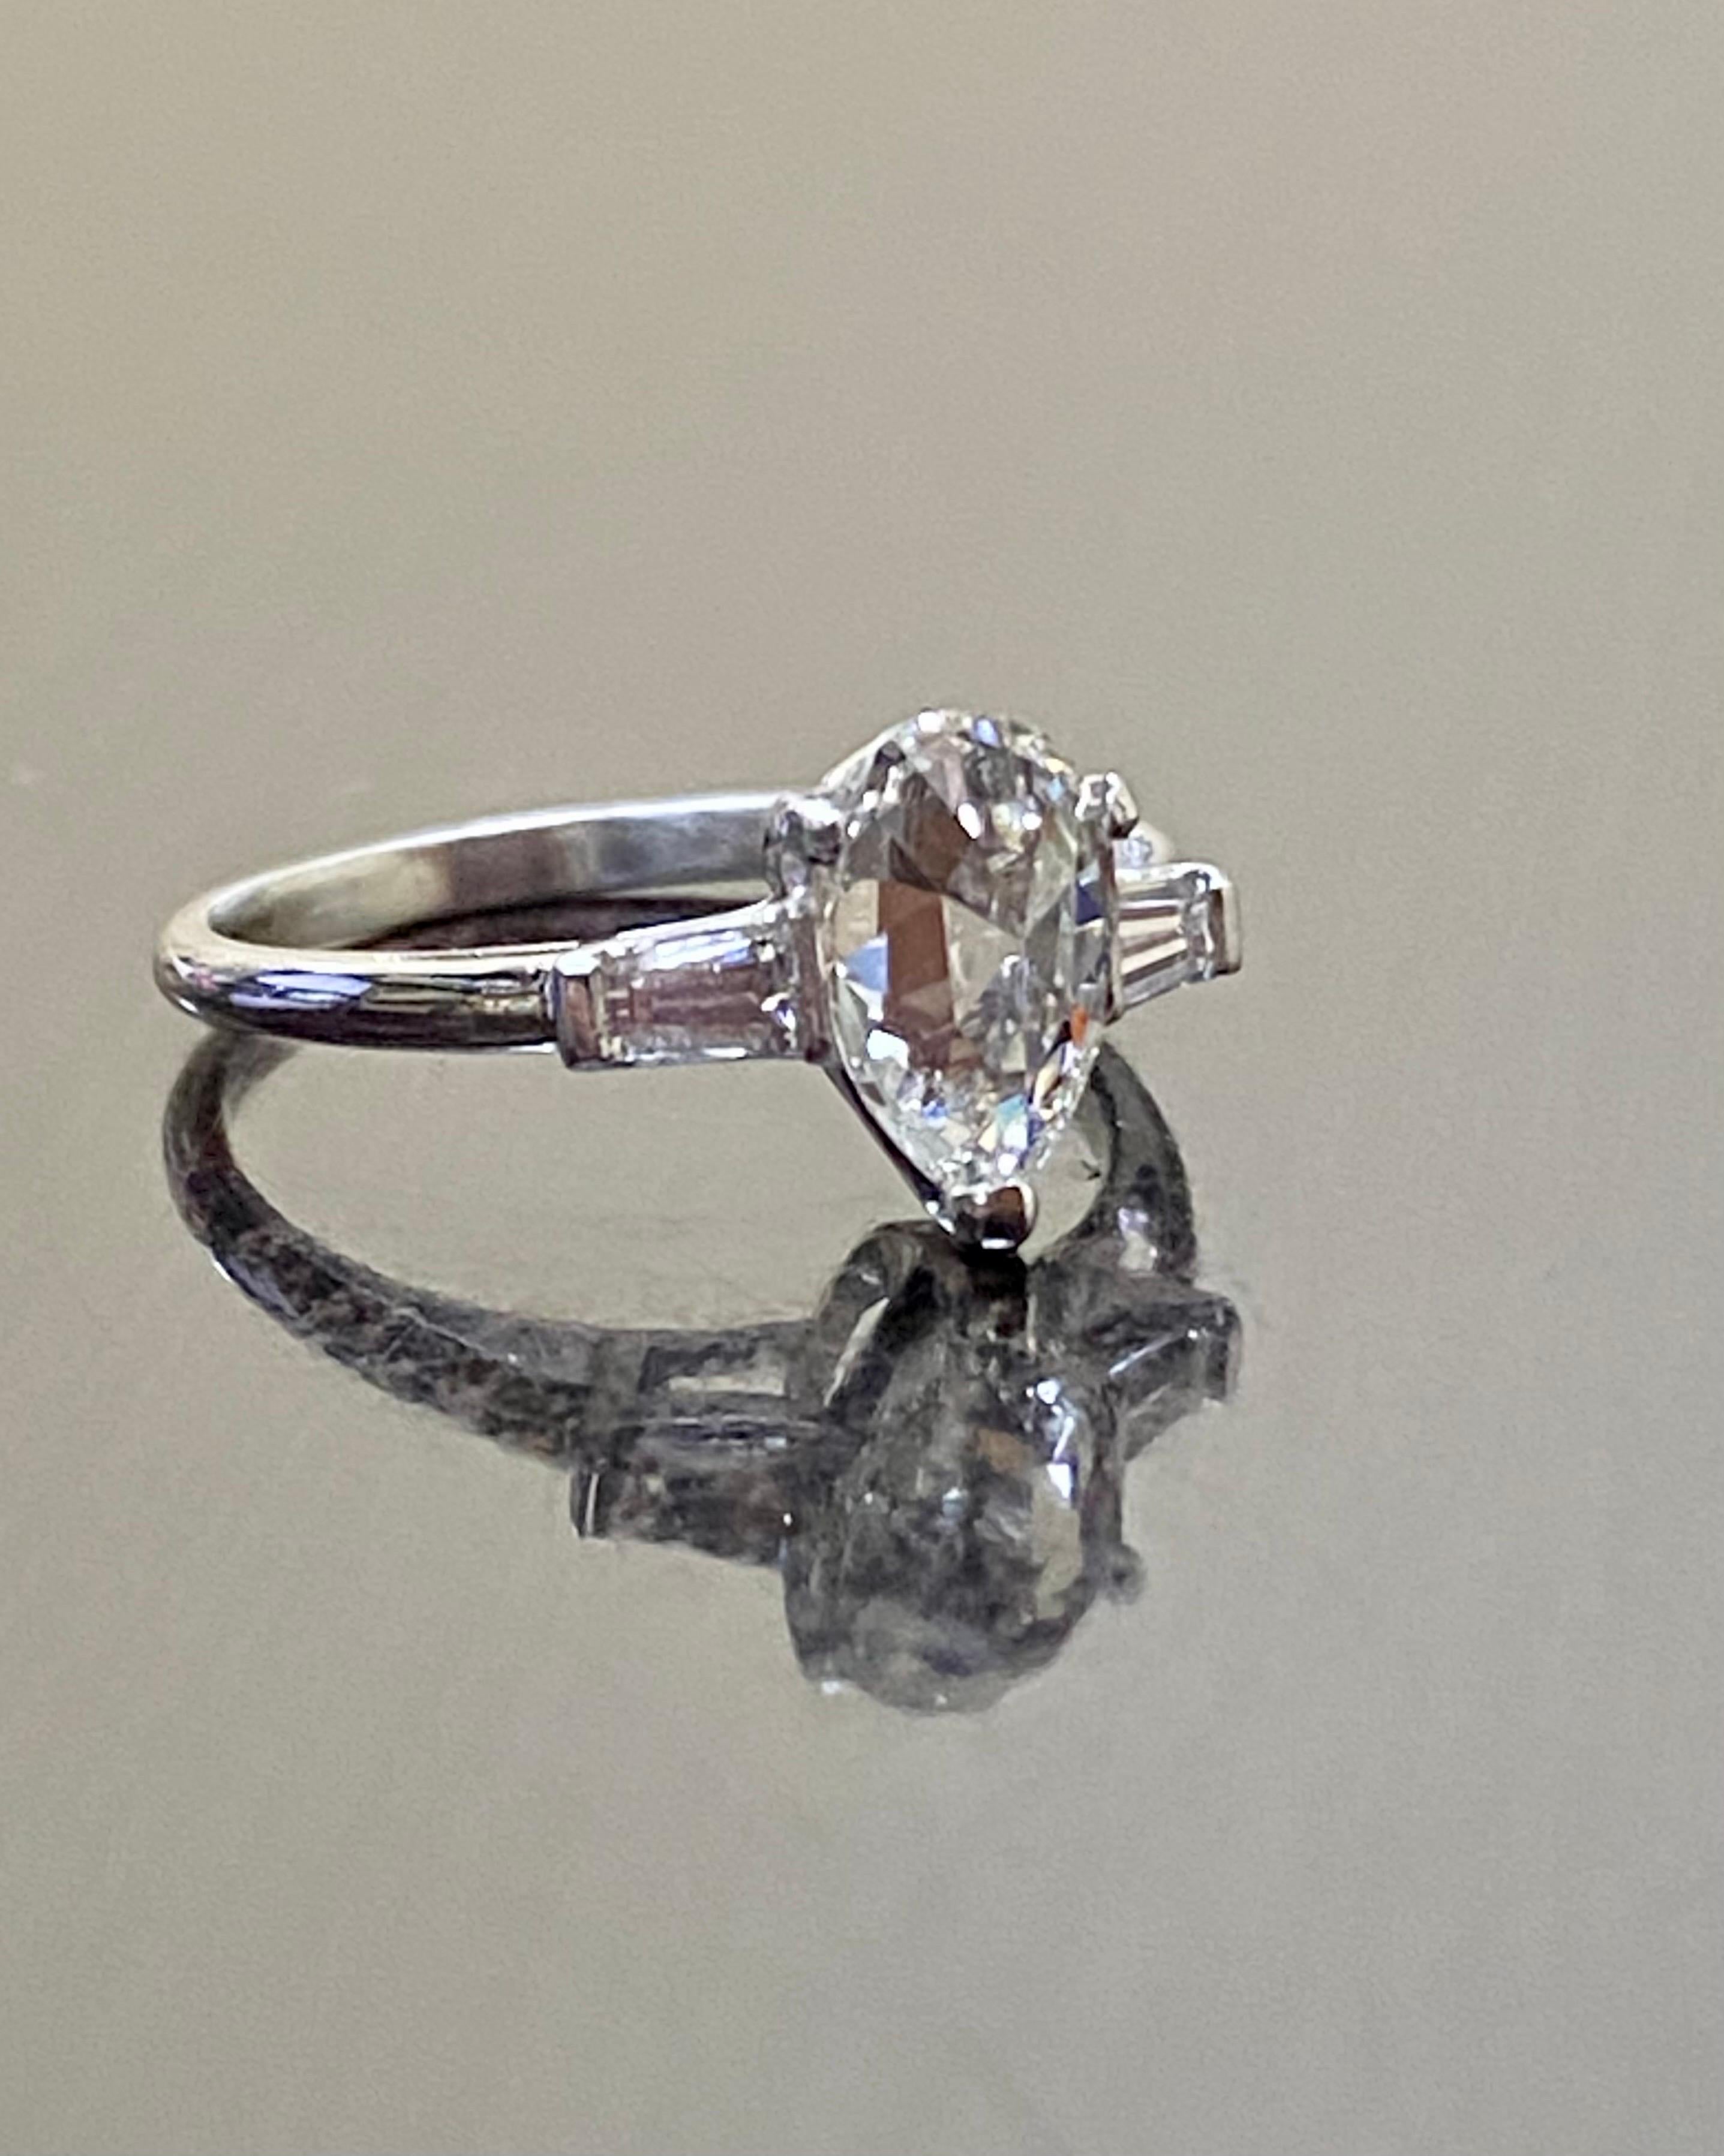 DeKara Designs Collection

Metal- 90% Platinum 10% Iridium.

Stones- EGL USA Certified Pear Shape Diamond H-I Color VS2-SI1 Clarity 1.12 Carats, 2 Baguette Diamonds G-H Color VS1-2 Clarity 0.25 Carats.

Ring Comes With EGL Certificate and